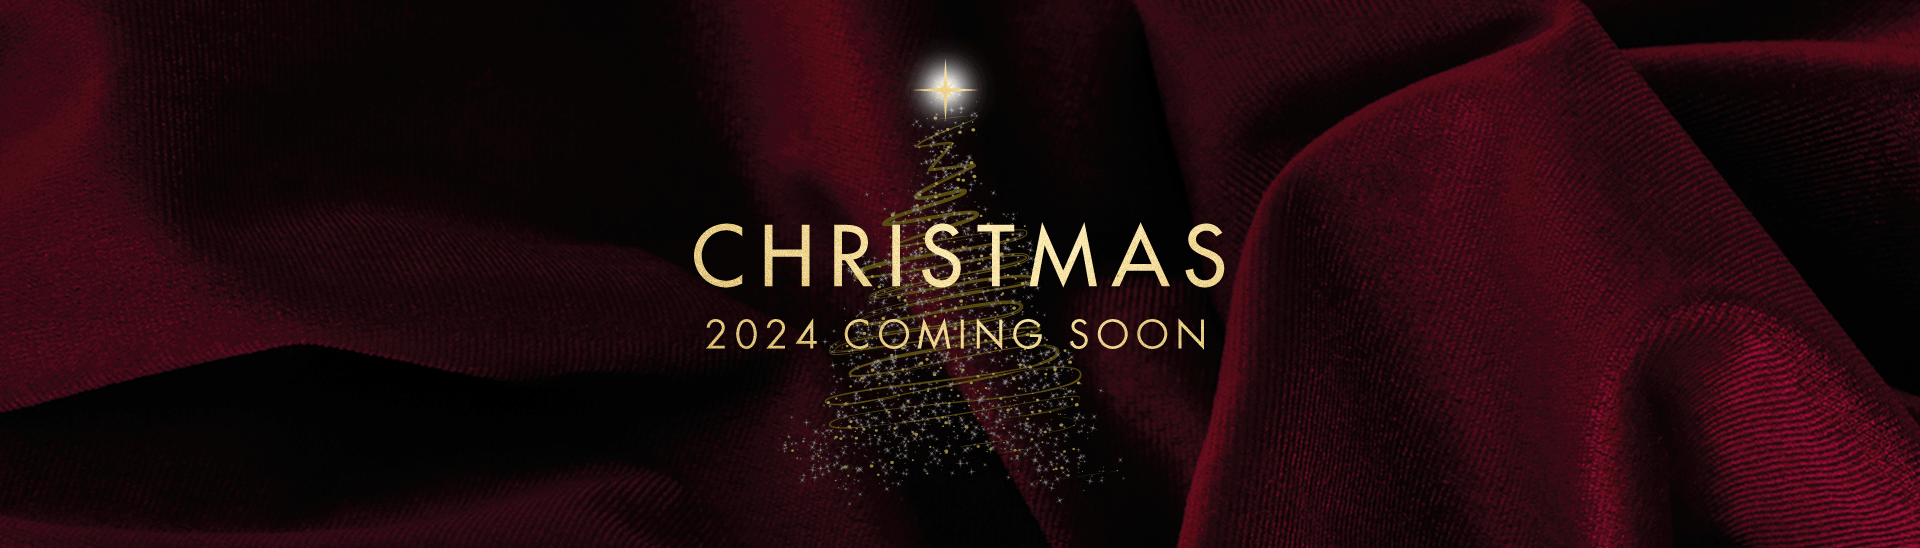 Christmas 2024 at Cheshire